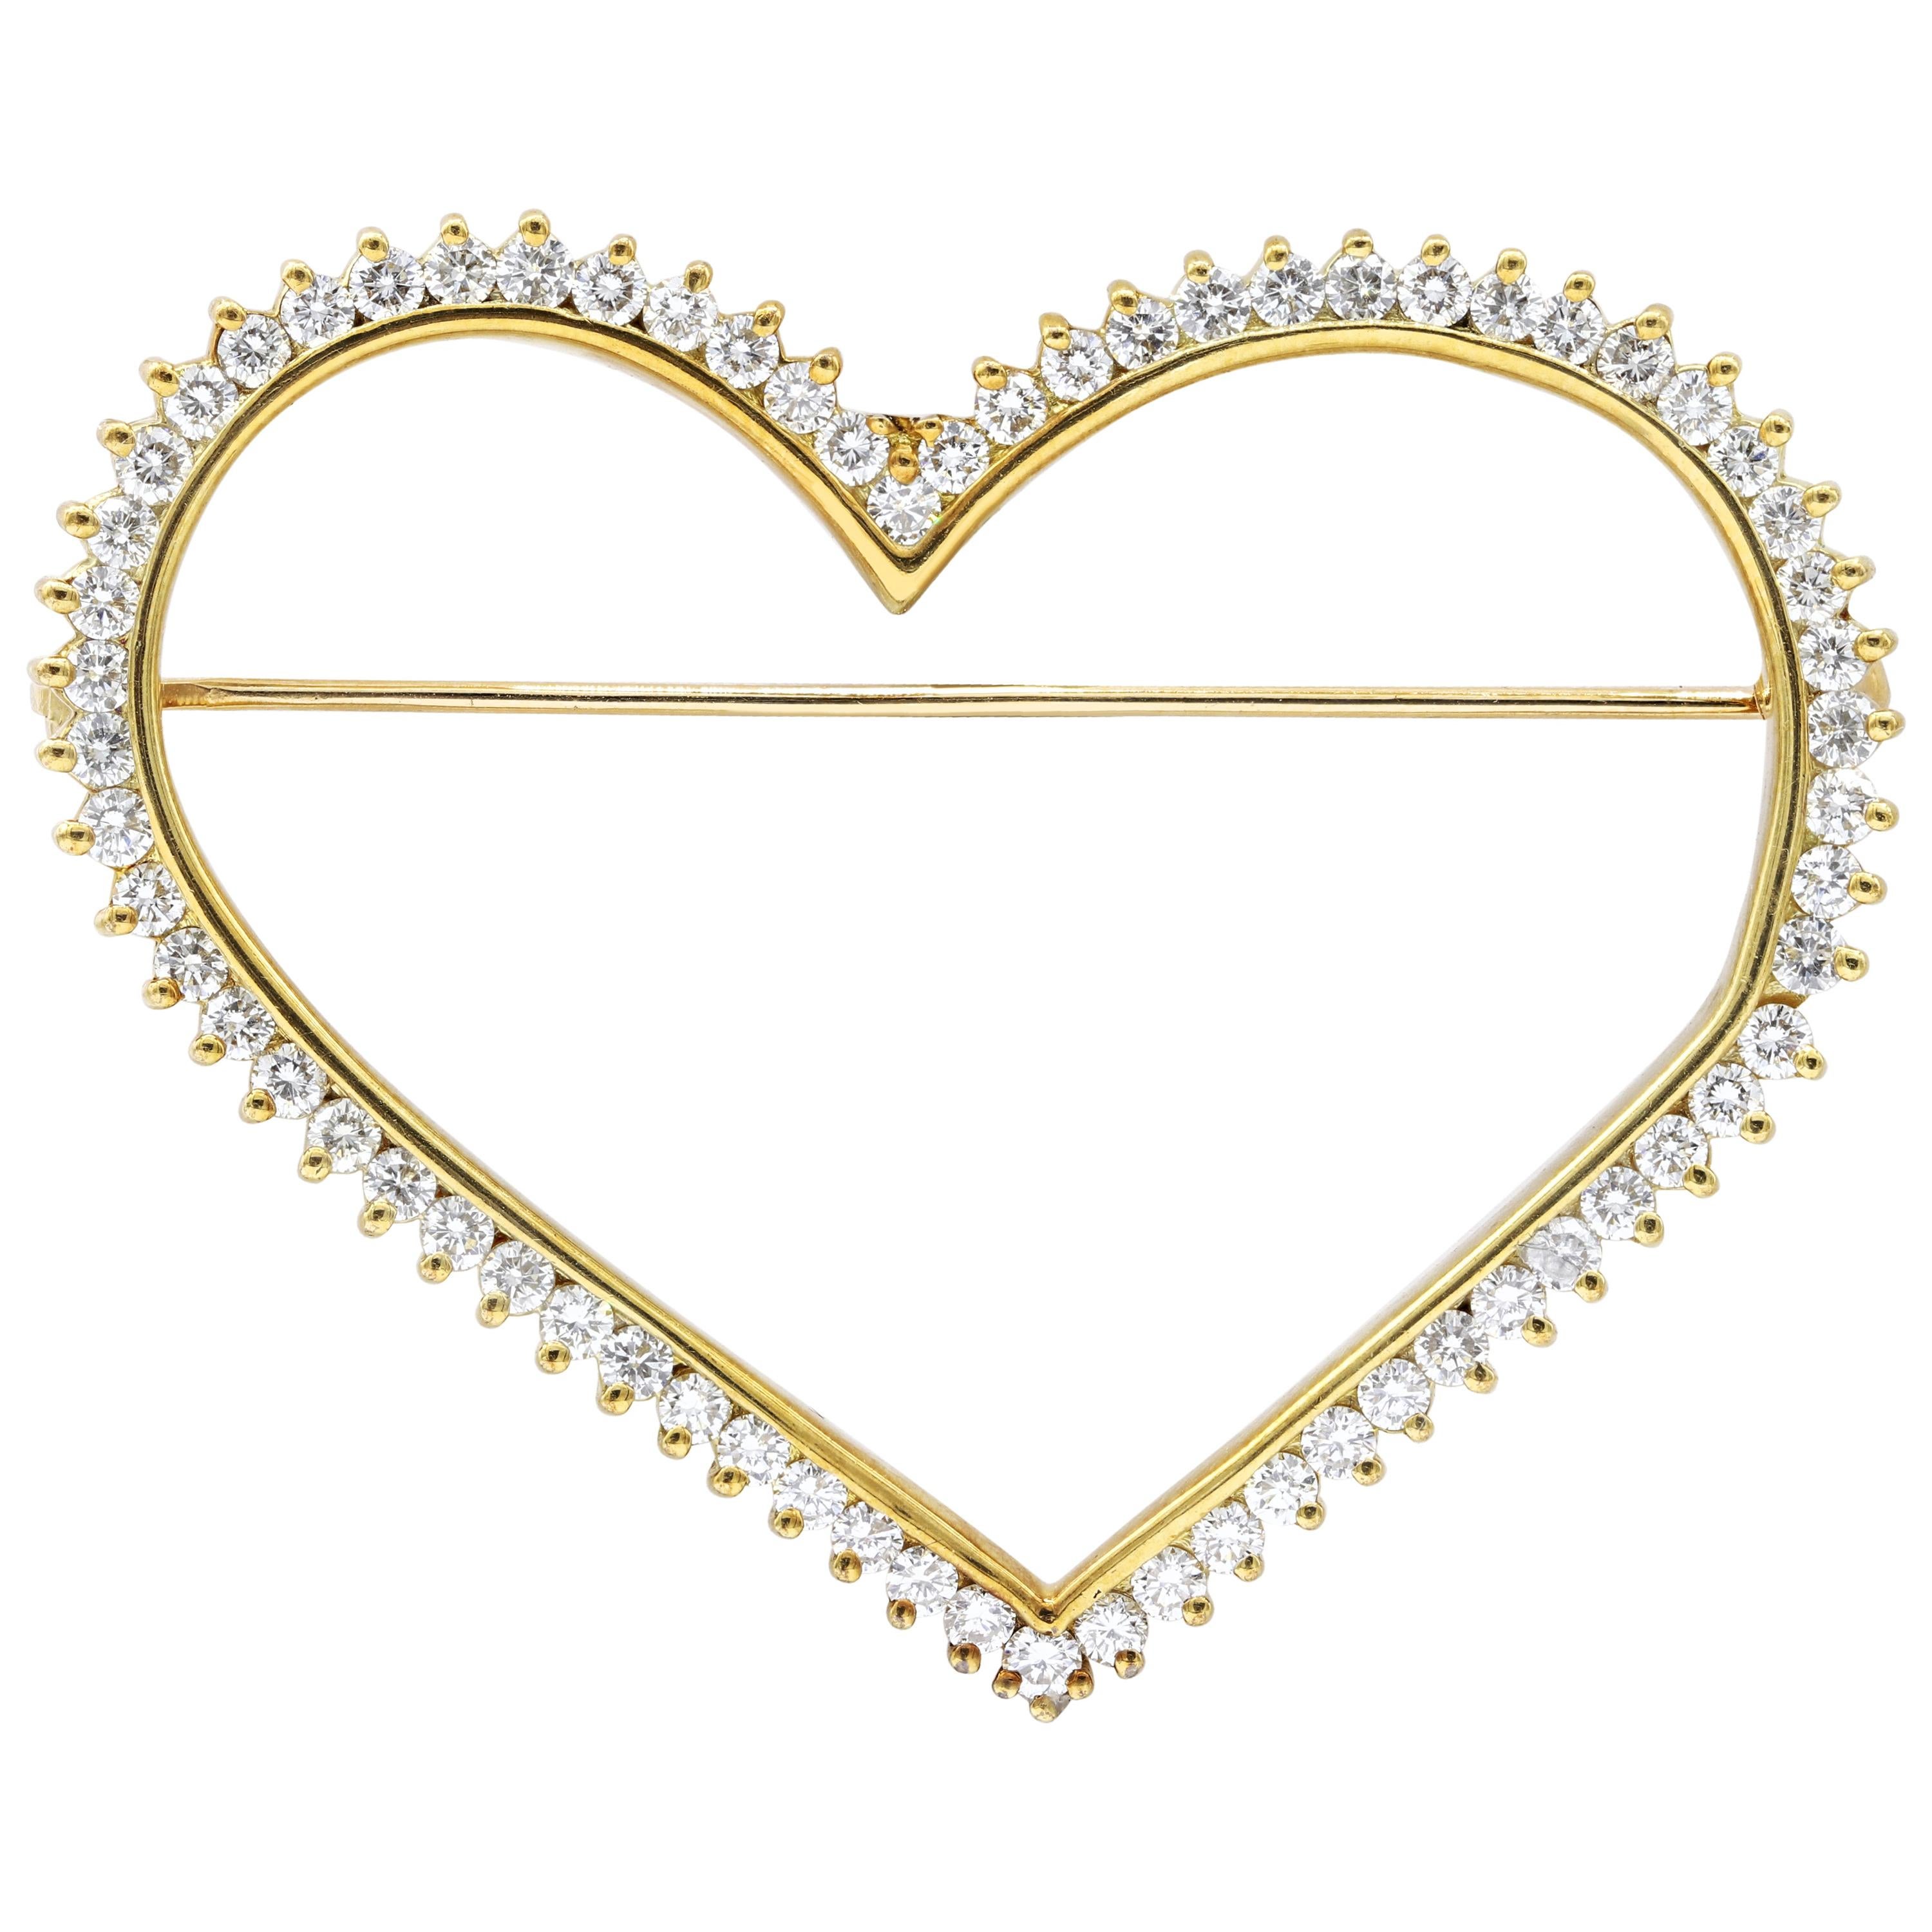 Yellow Gold Heart Shape Brooch Features Diamonds